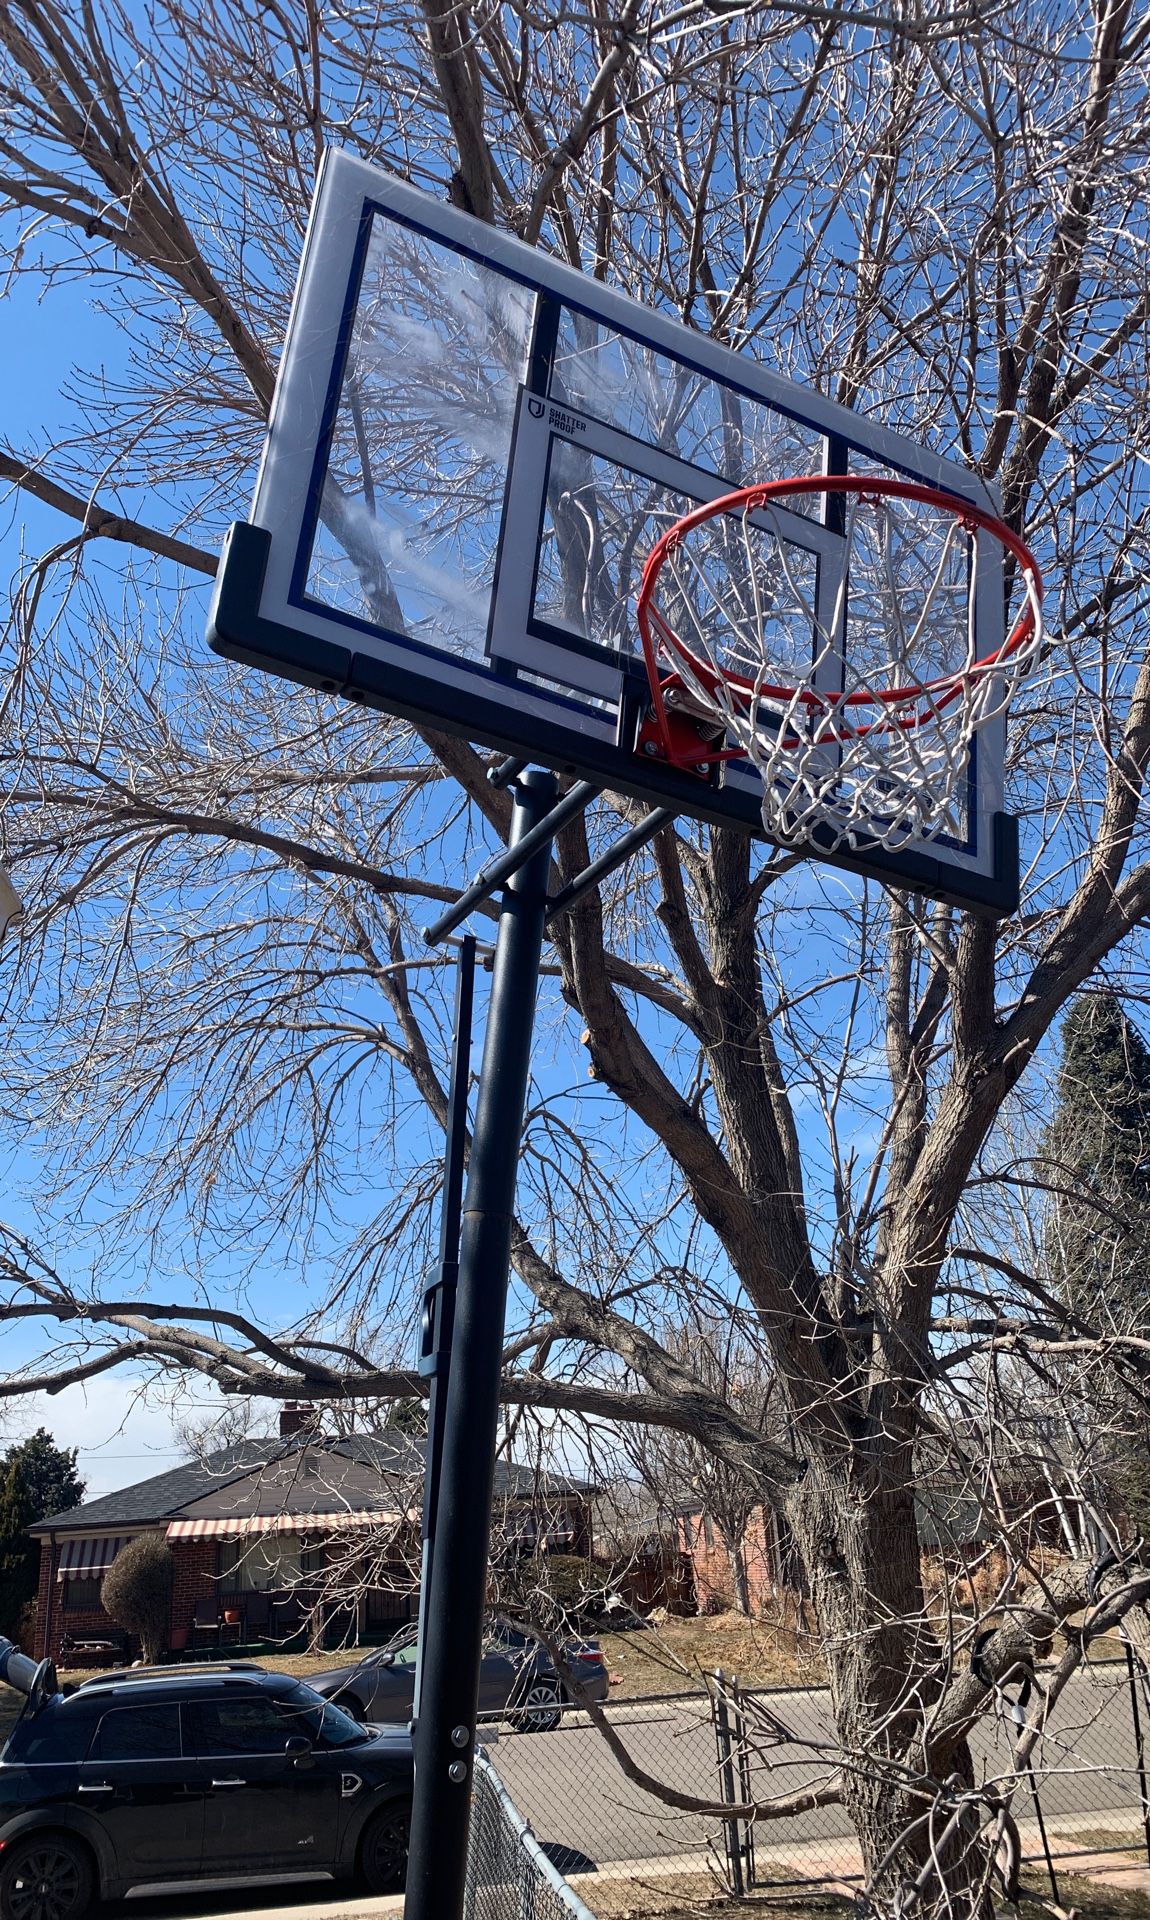 Lifetime Adjustable Basketball Hoop